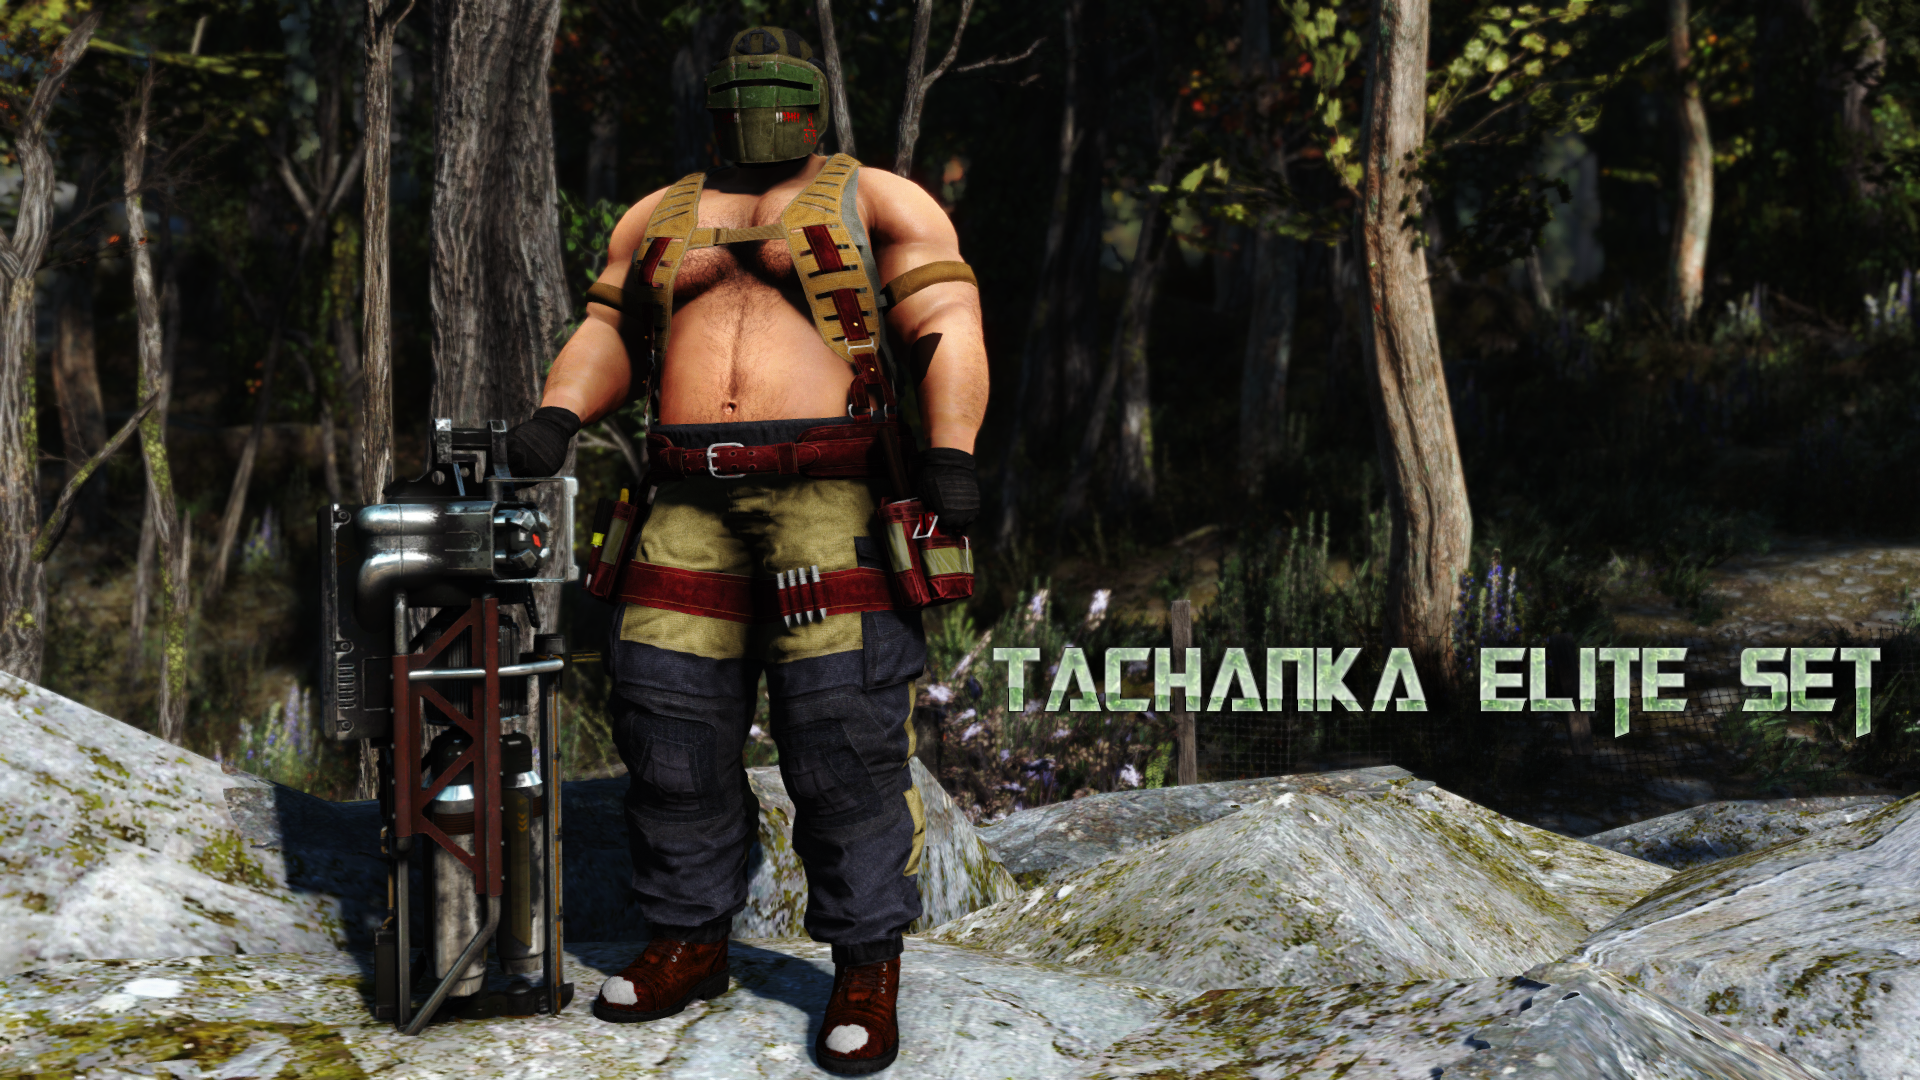 Tachanka Elite Set for Atomic Muscle